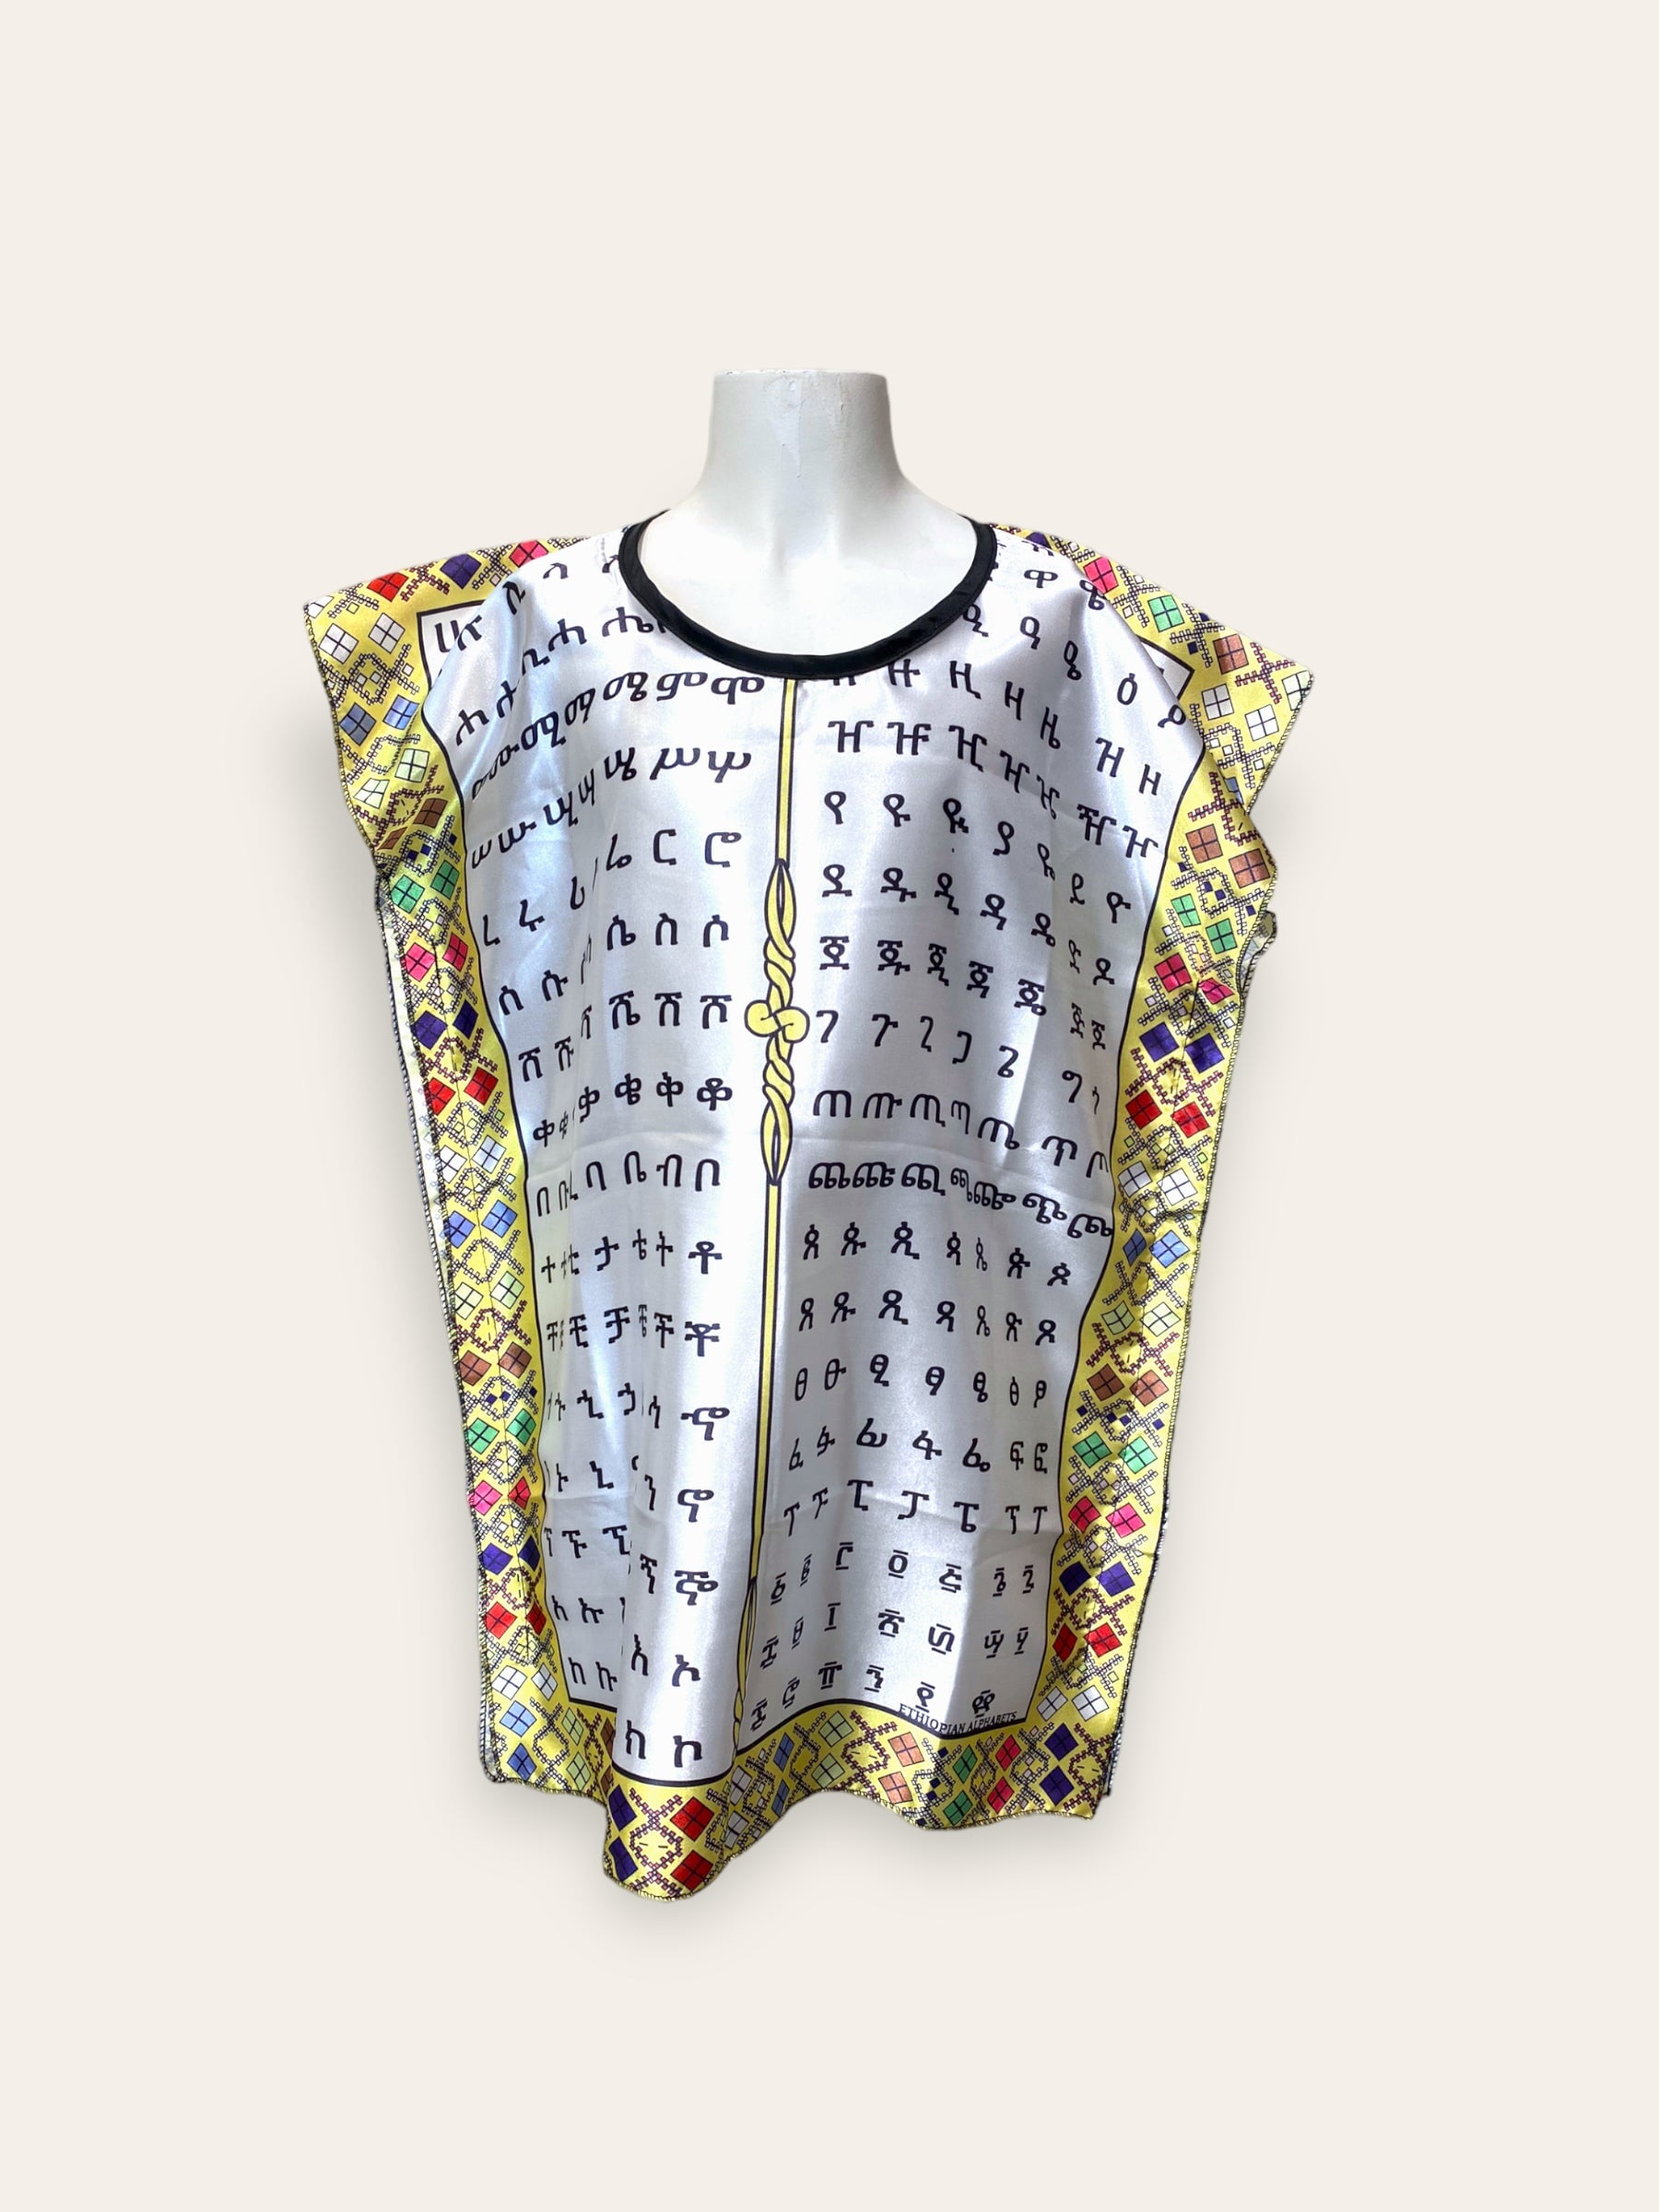 Traditional Eritrean/Ethiopian alphabet Shirt #5 Grmawit 